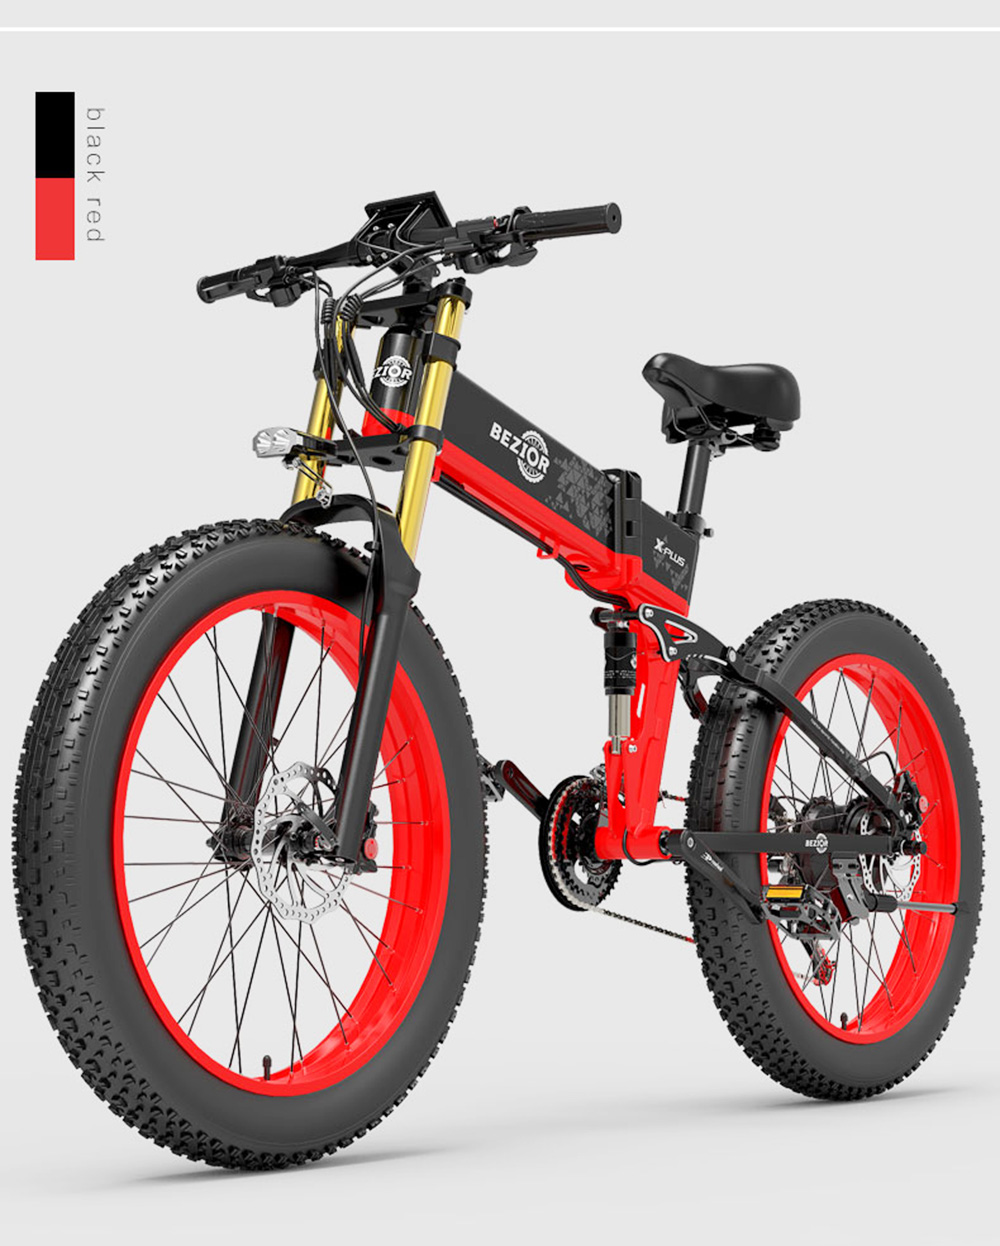 BEZIOR X-PLUS Mountain elektrische fiets, 1500W motor, 48V 17.5Ah accu, 26*4.0 band, 40 km/h max snelheid - Rood